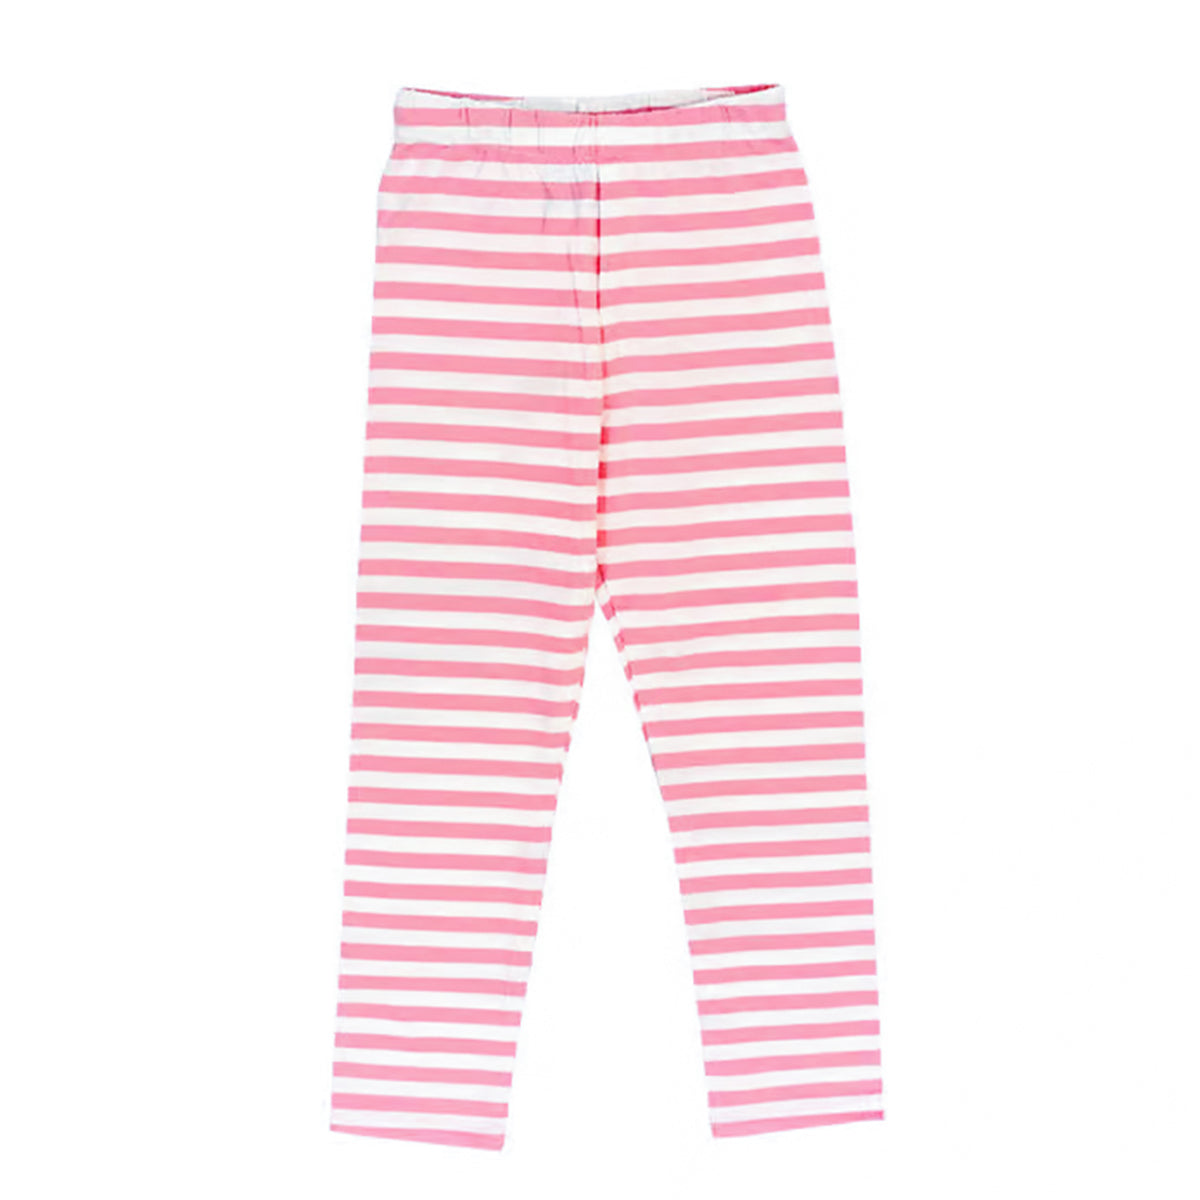 Bailey Boys Toddler Girl's Pink Striped Leggings